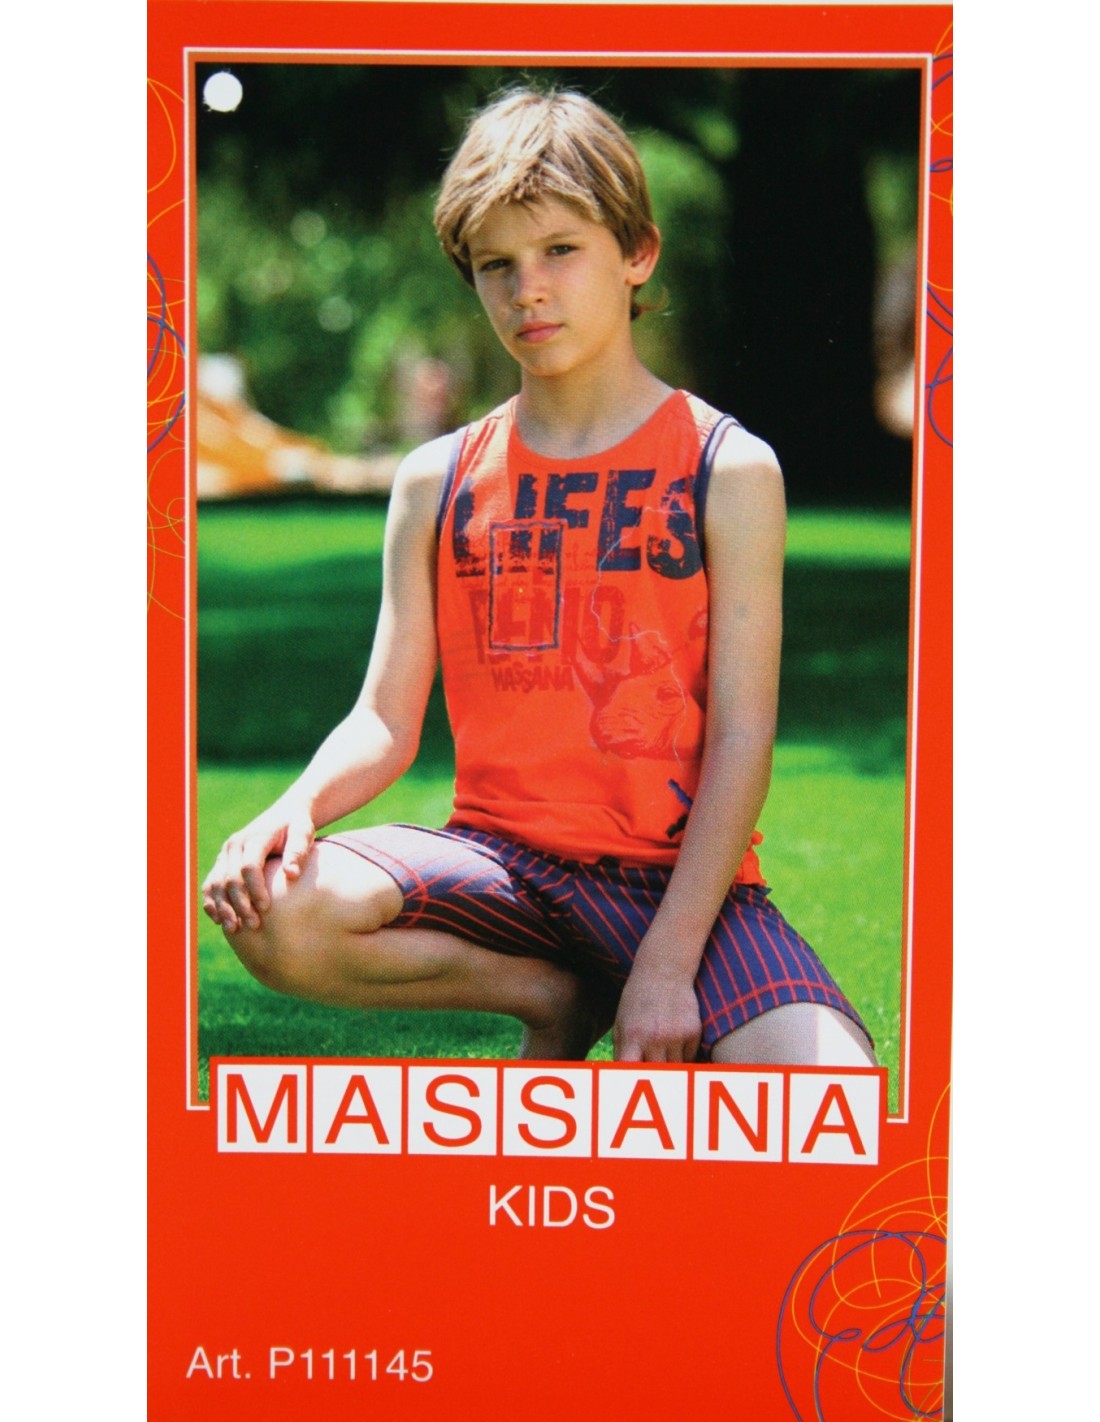 Pijama para niño Massana de verano pantalón corto color naranja con estampado. Talla 16